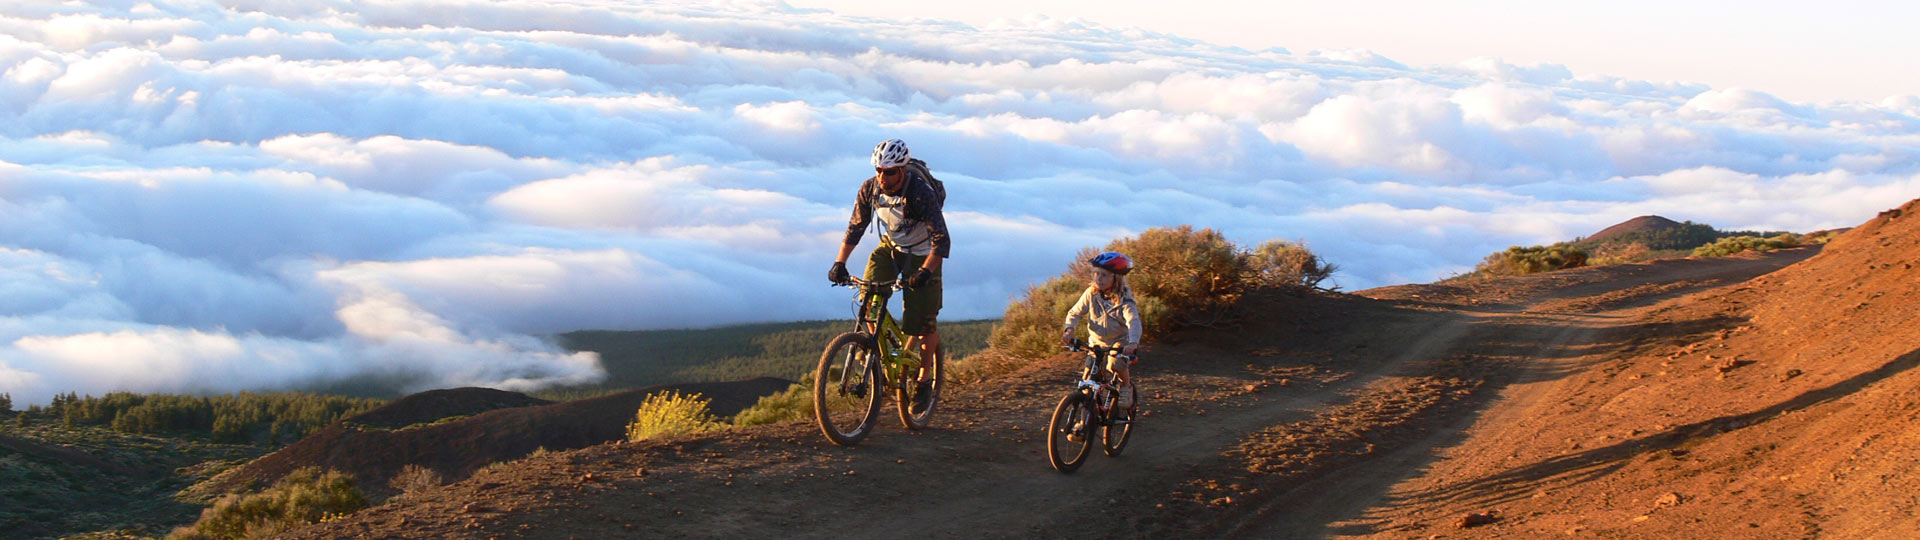 Famiglia in mountain bike a Tenerife su un mare di nuvole 